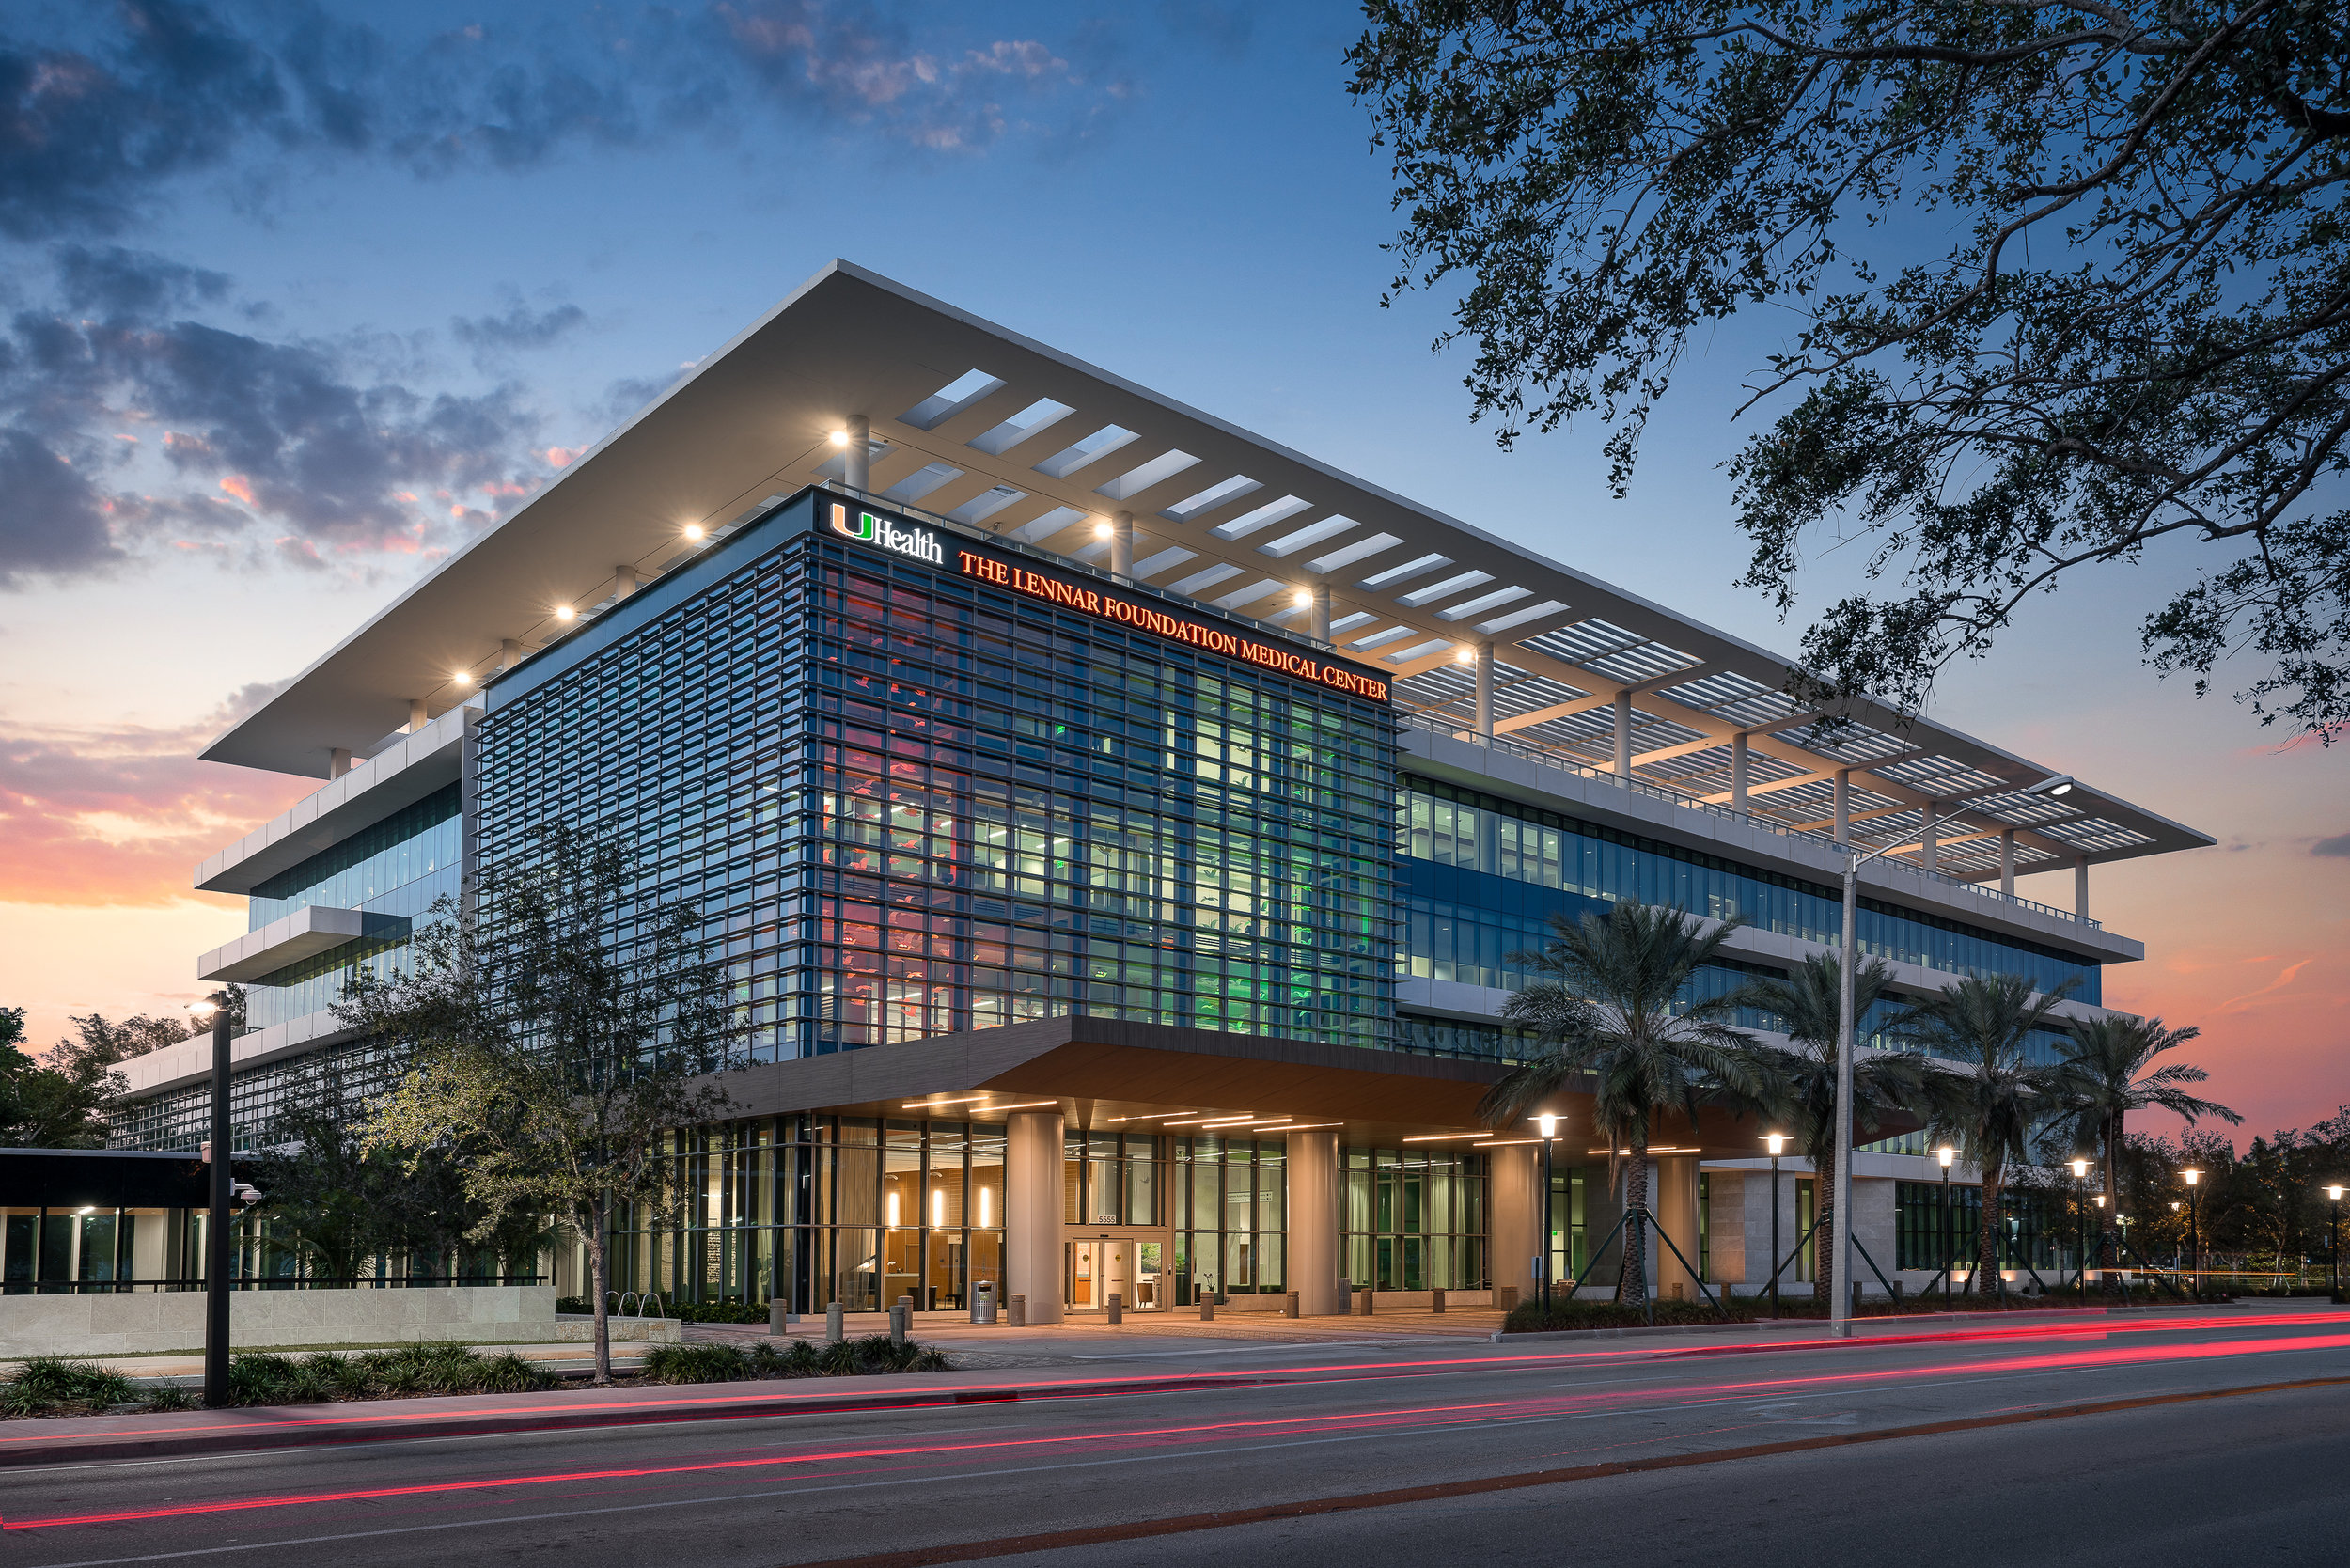 University of Miami The Lennar Medical Center: Miami, FL